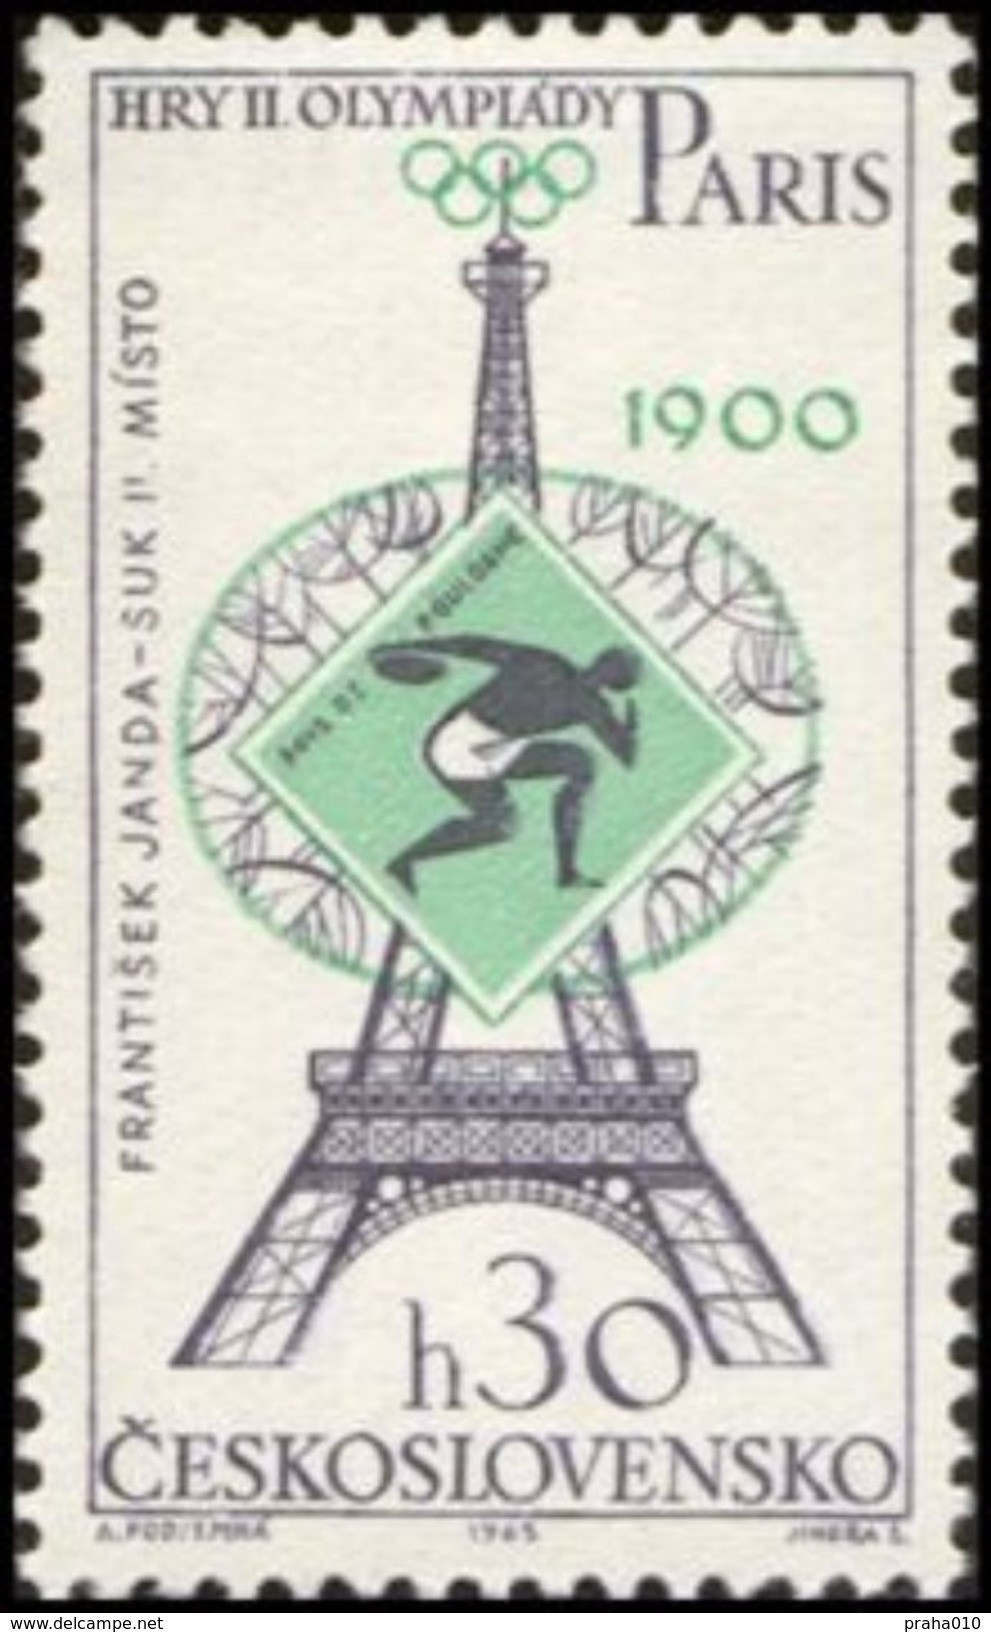 Czechoslovakia / Stamps (1965) 1429: Olympic Games 1900 Paris, F. Janda-Suk (discus Throw); Painter: Anna Podzemna - Ete 1900: Paris